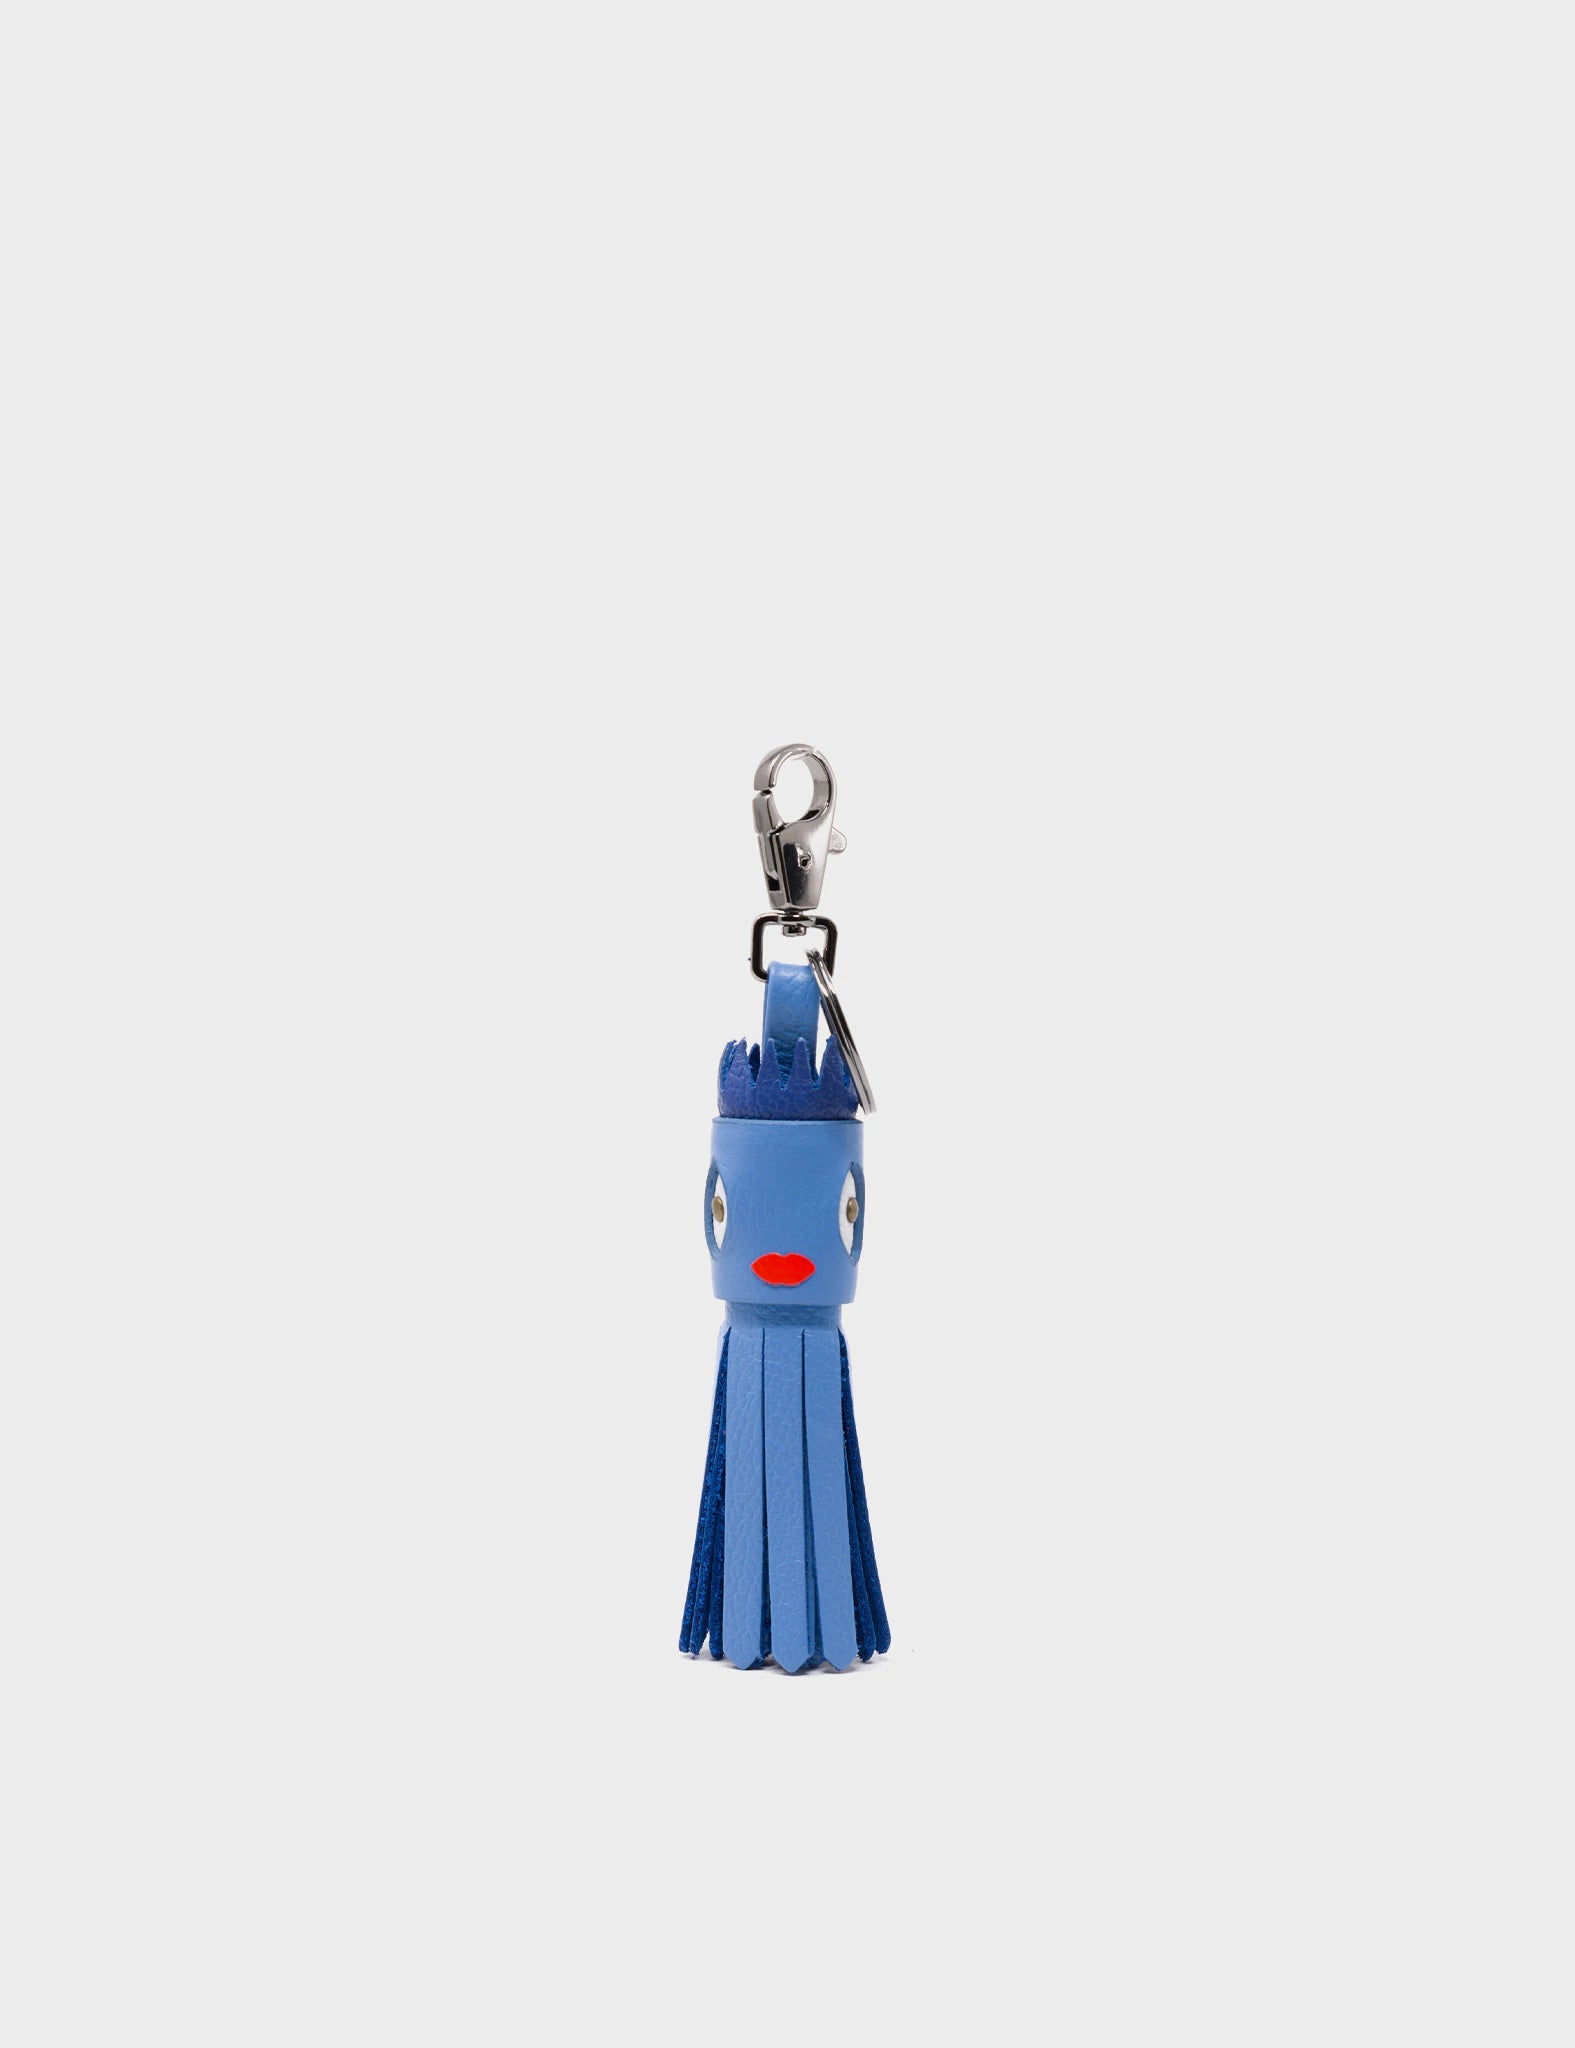 Queen Callie Marie Calamar Charm - Vista Blue Leather Keychain